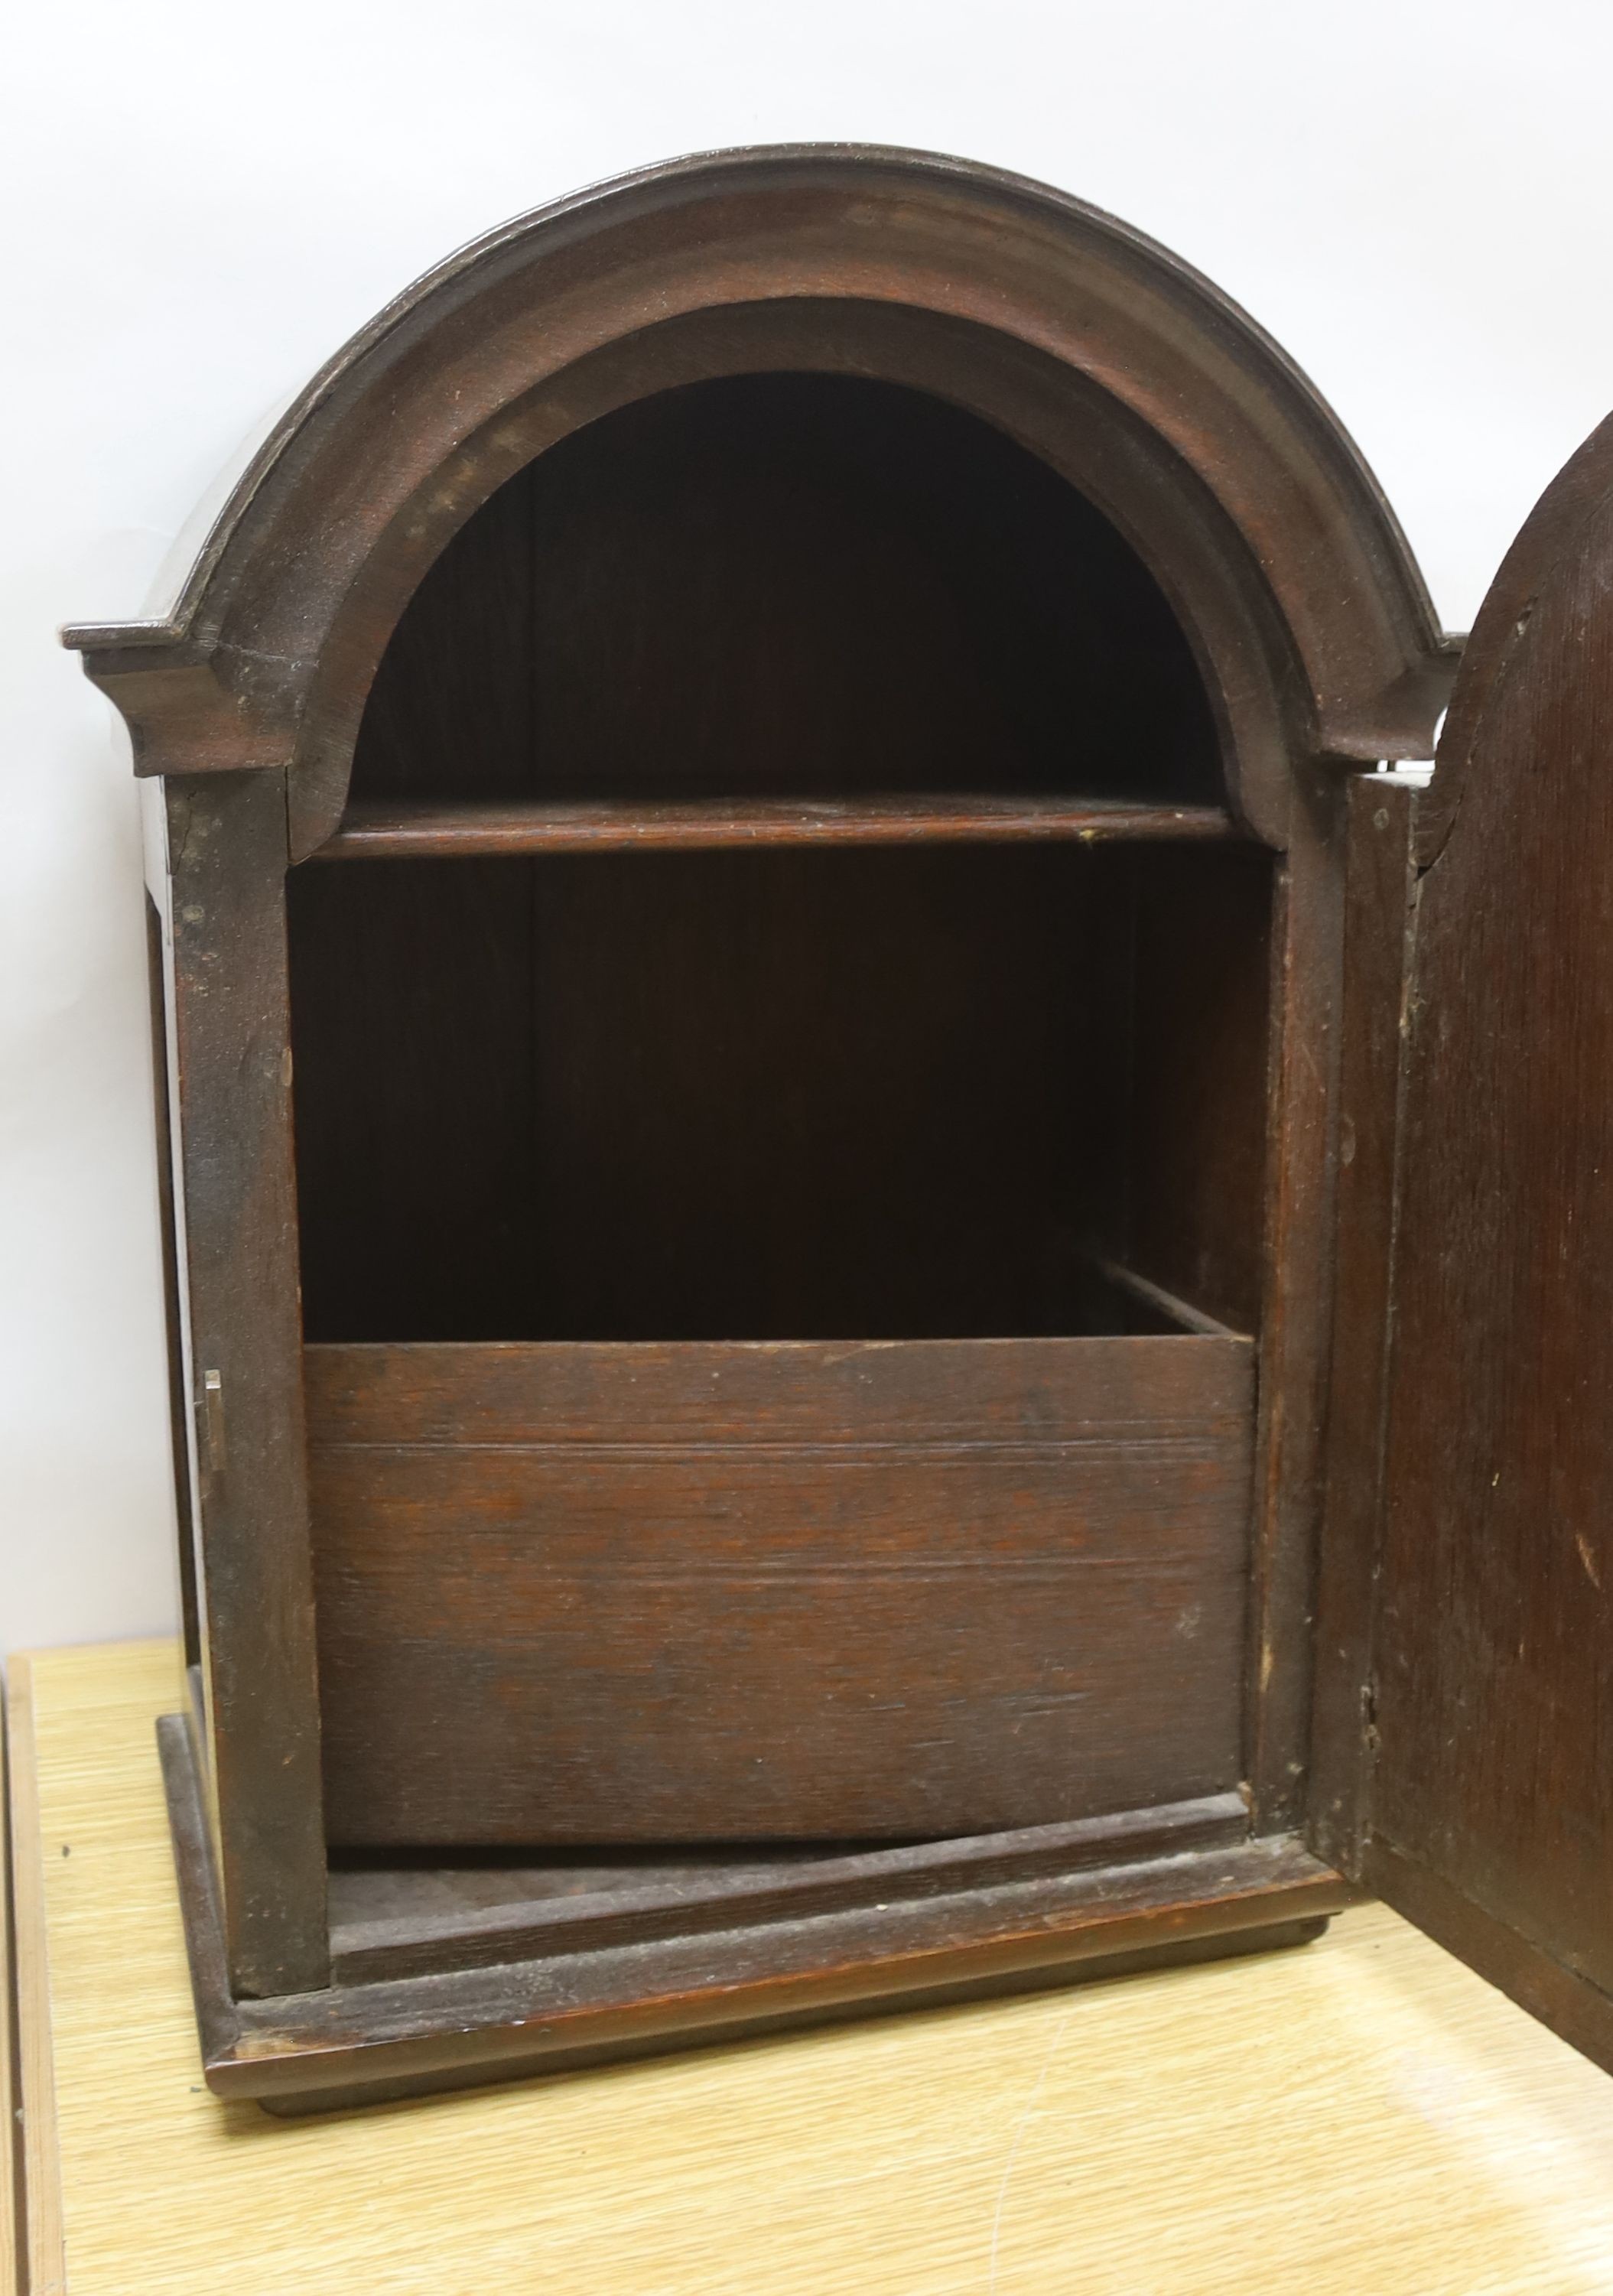 A 19th century Dutch oak wall-mounted smoker's cabinet (a.f.) - 50cm